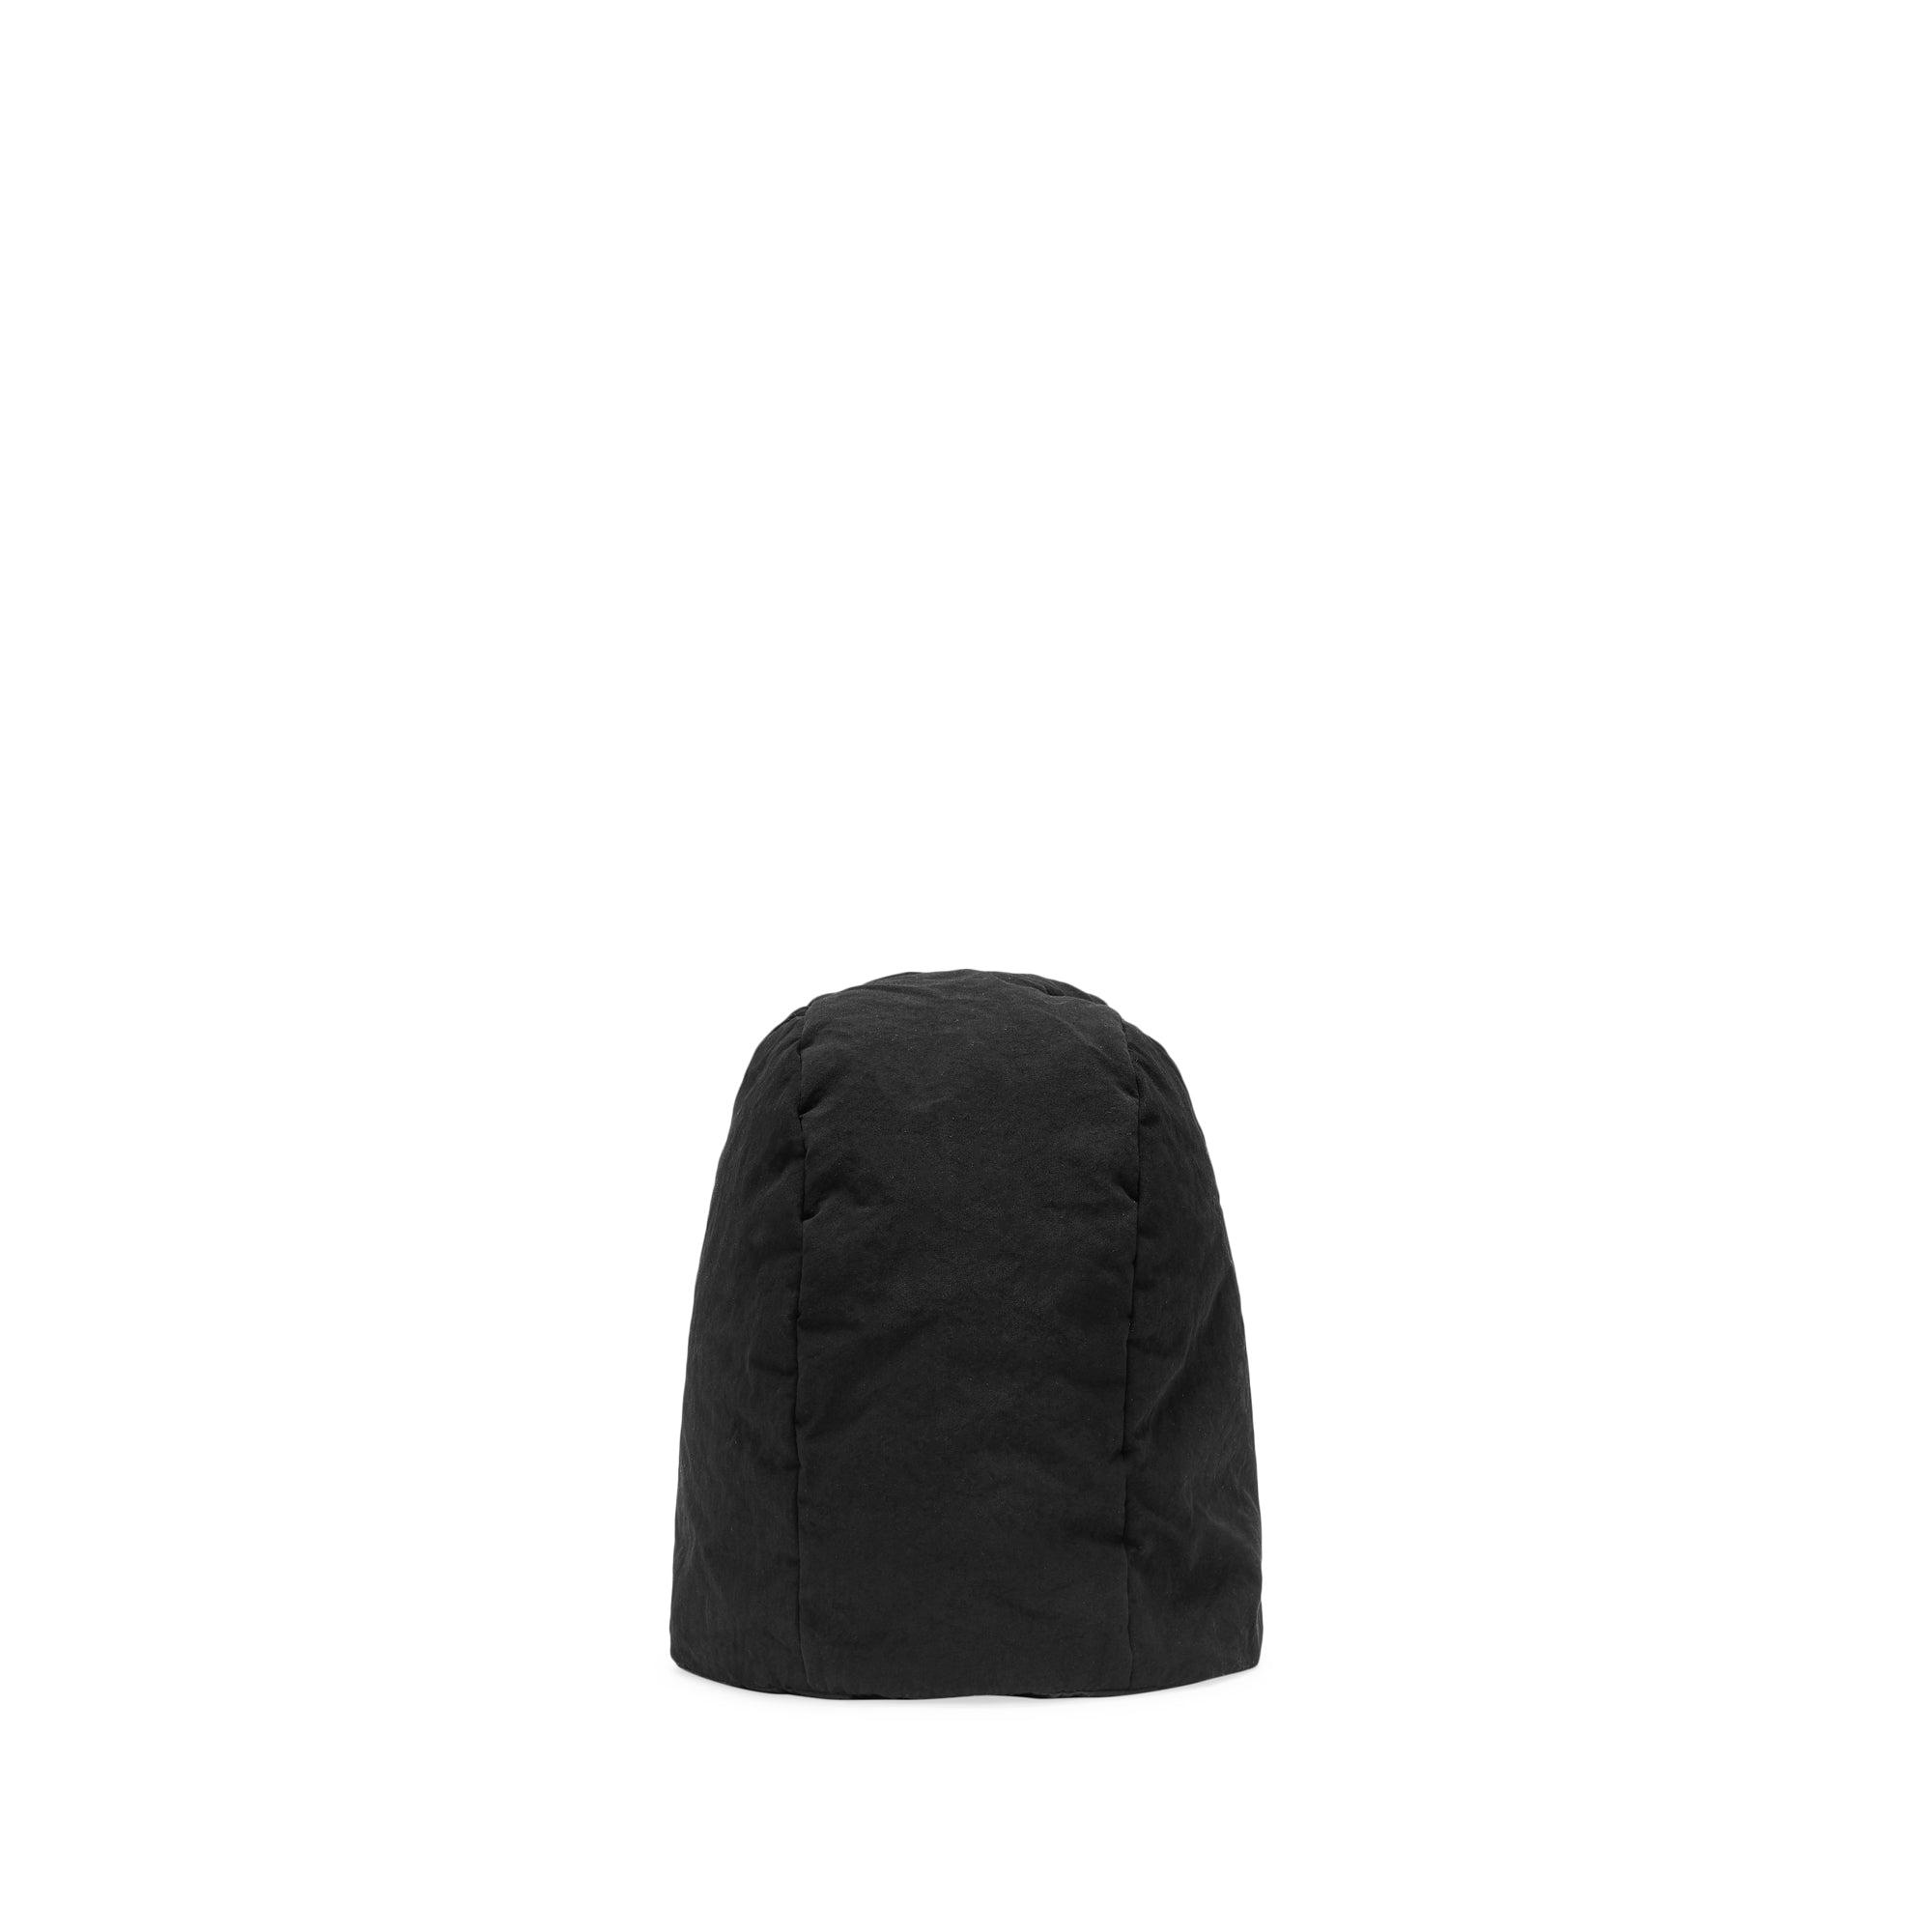 Casey Casey Men's One Paper Cotton Hat (Black) by CASEY CASEY